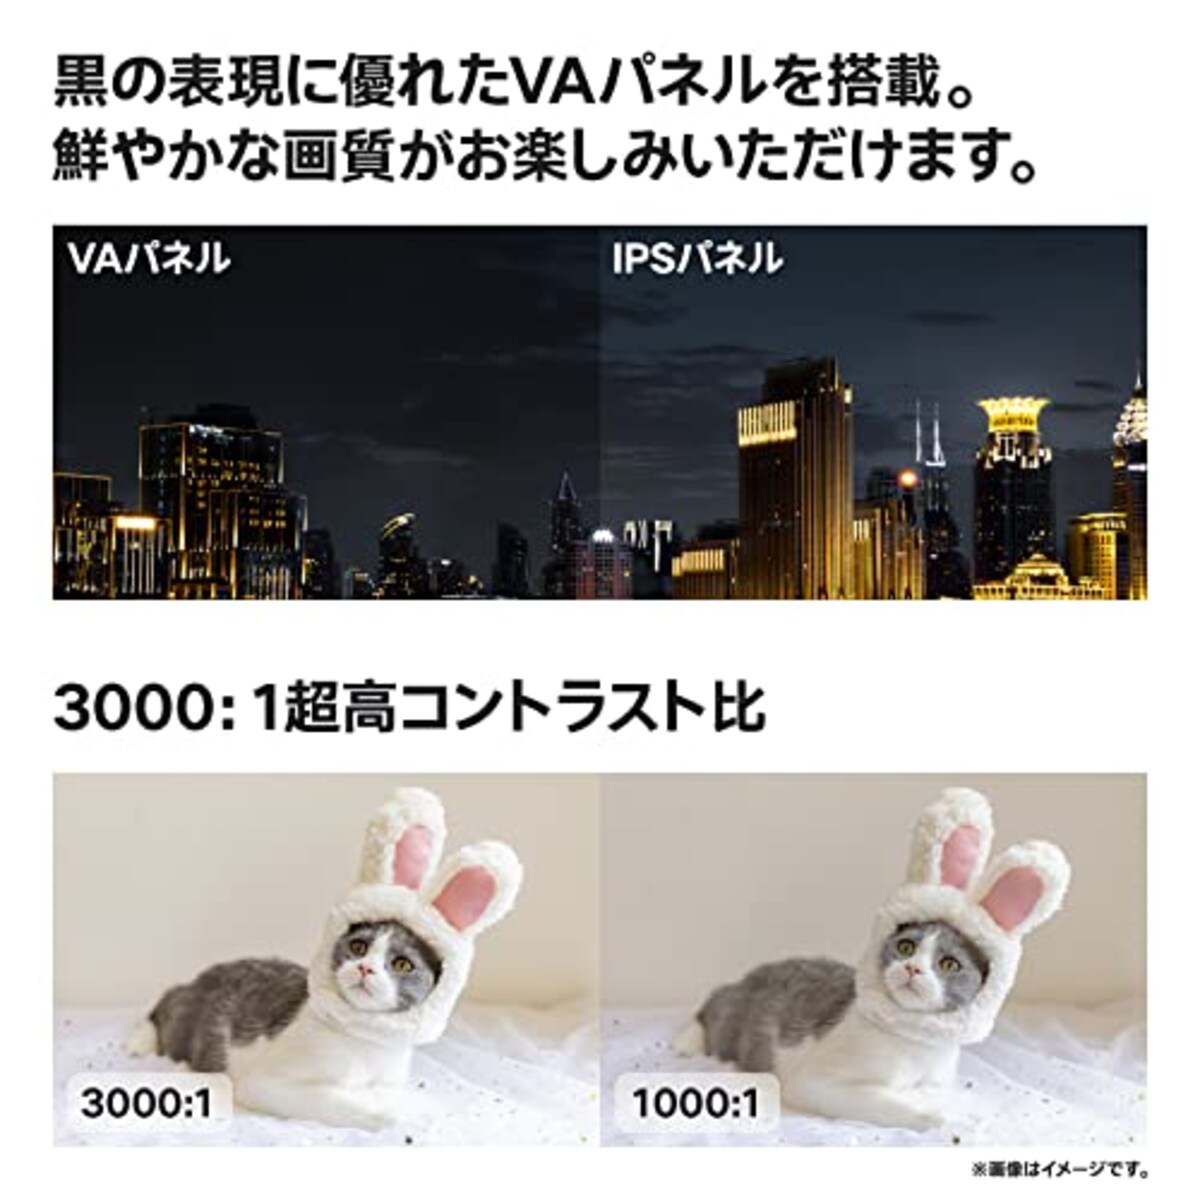  KOORUI 24インチ モニター ディスプレイ VA非光沢 FHD 最大100Hz VESA対応 ブルーライト軽減 フリッカーフリー フレームレス HDMI 1.4/VGA スピーカー搭載画像4 